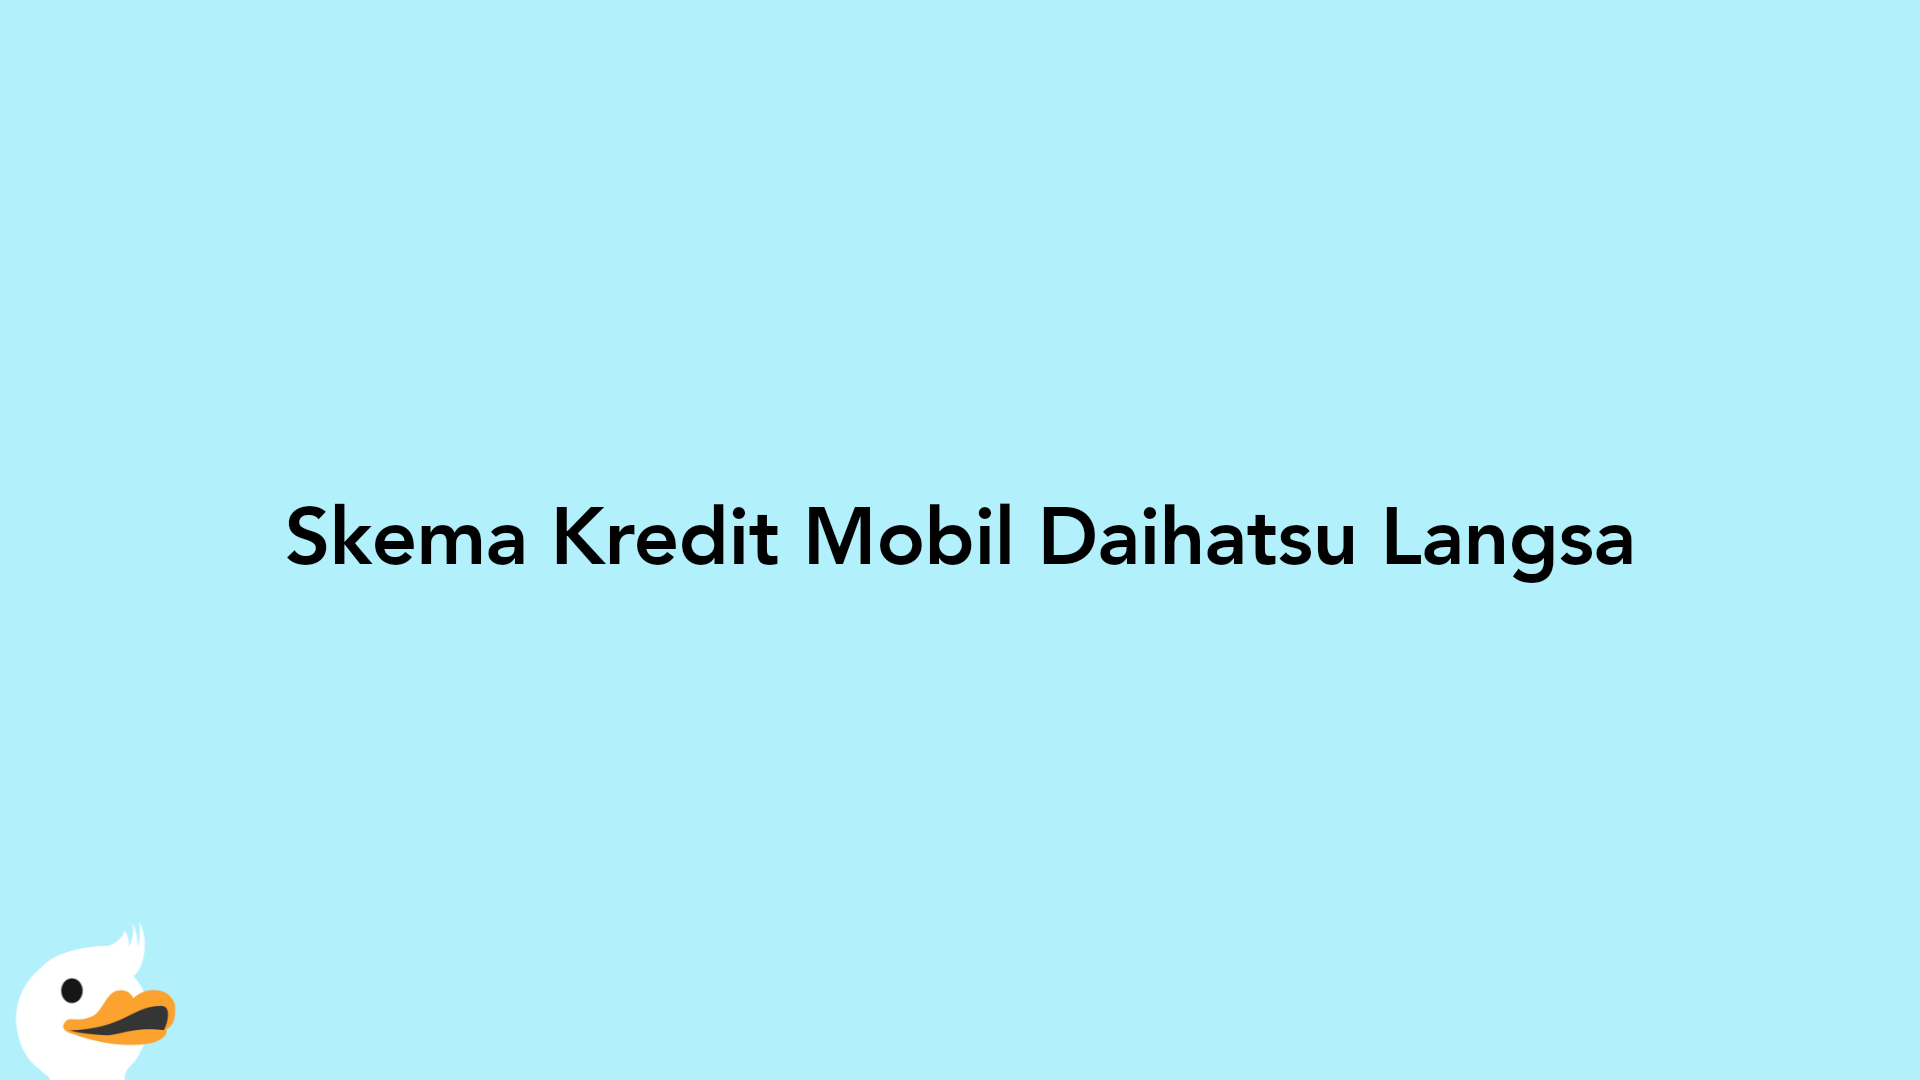 Skema Kredit Mobil Daihatsu Langsa